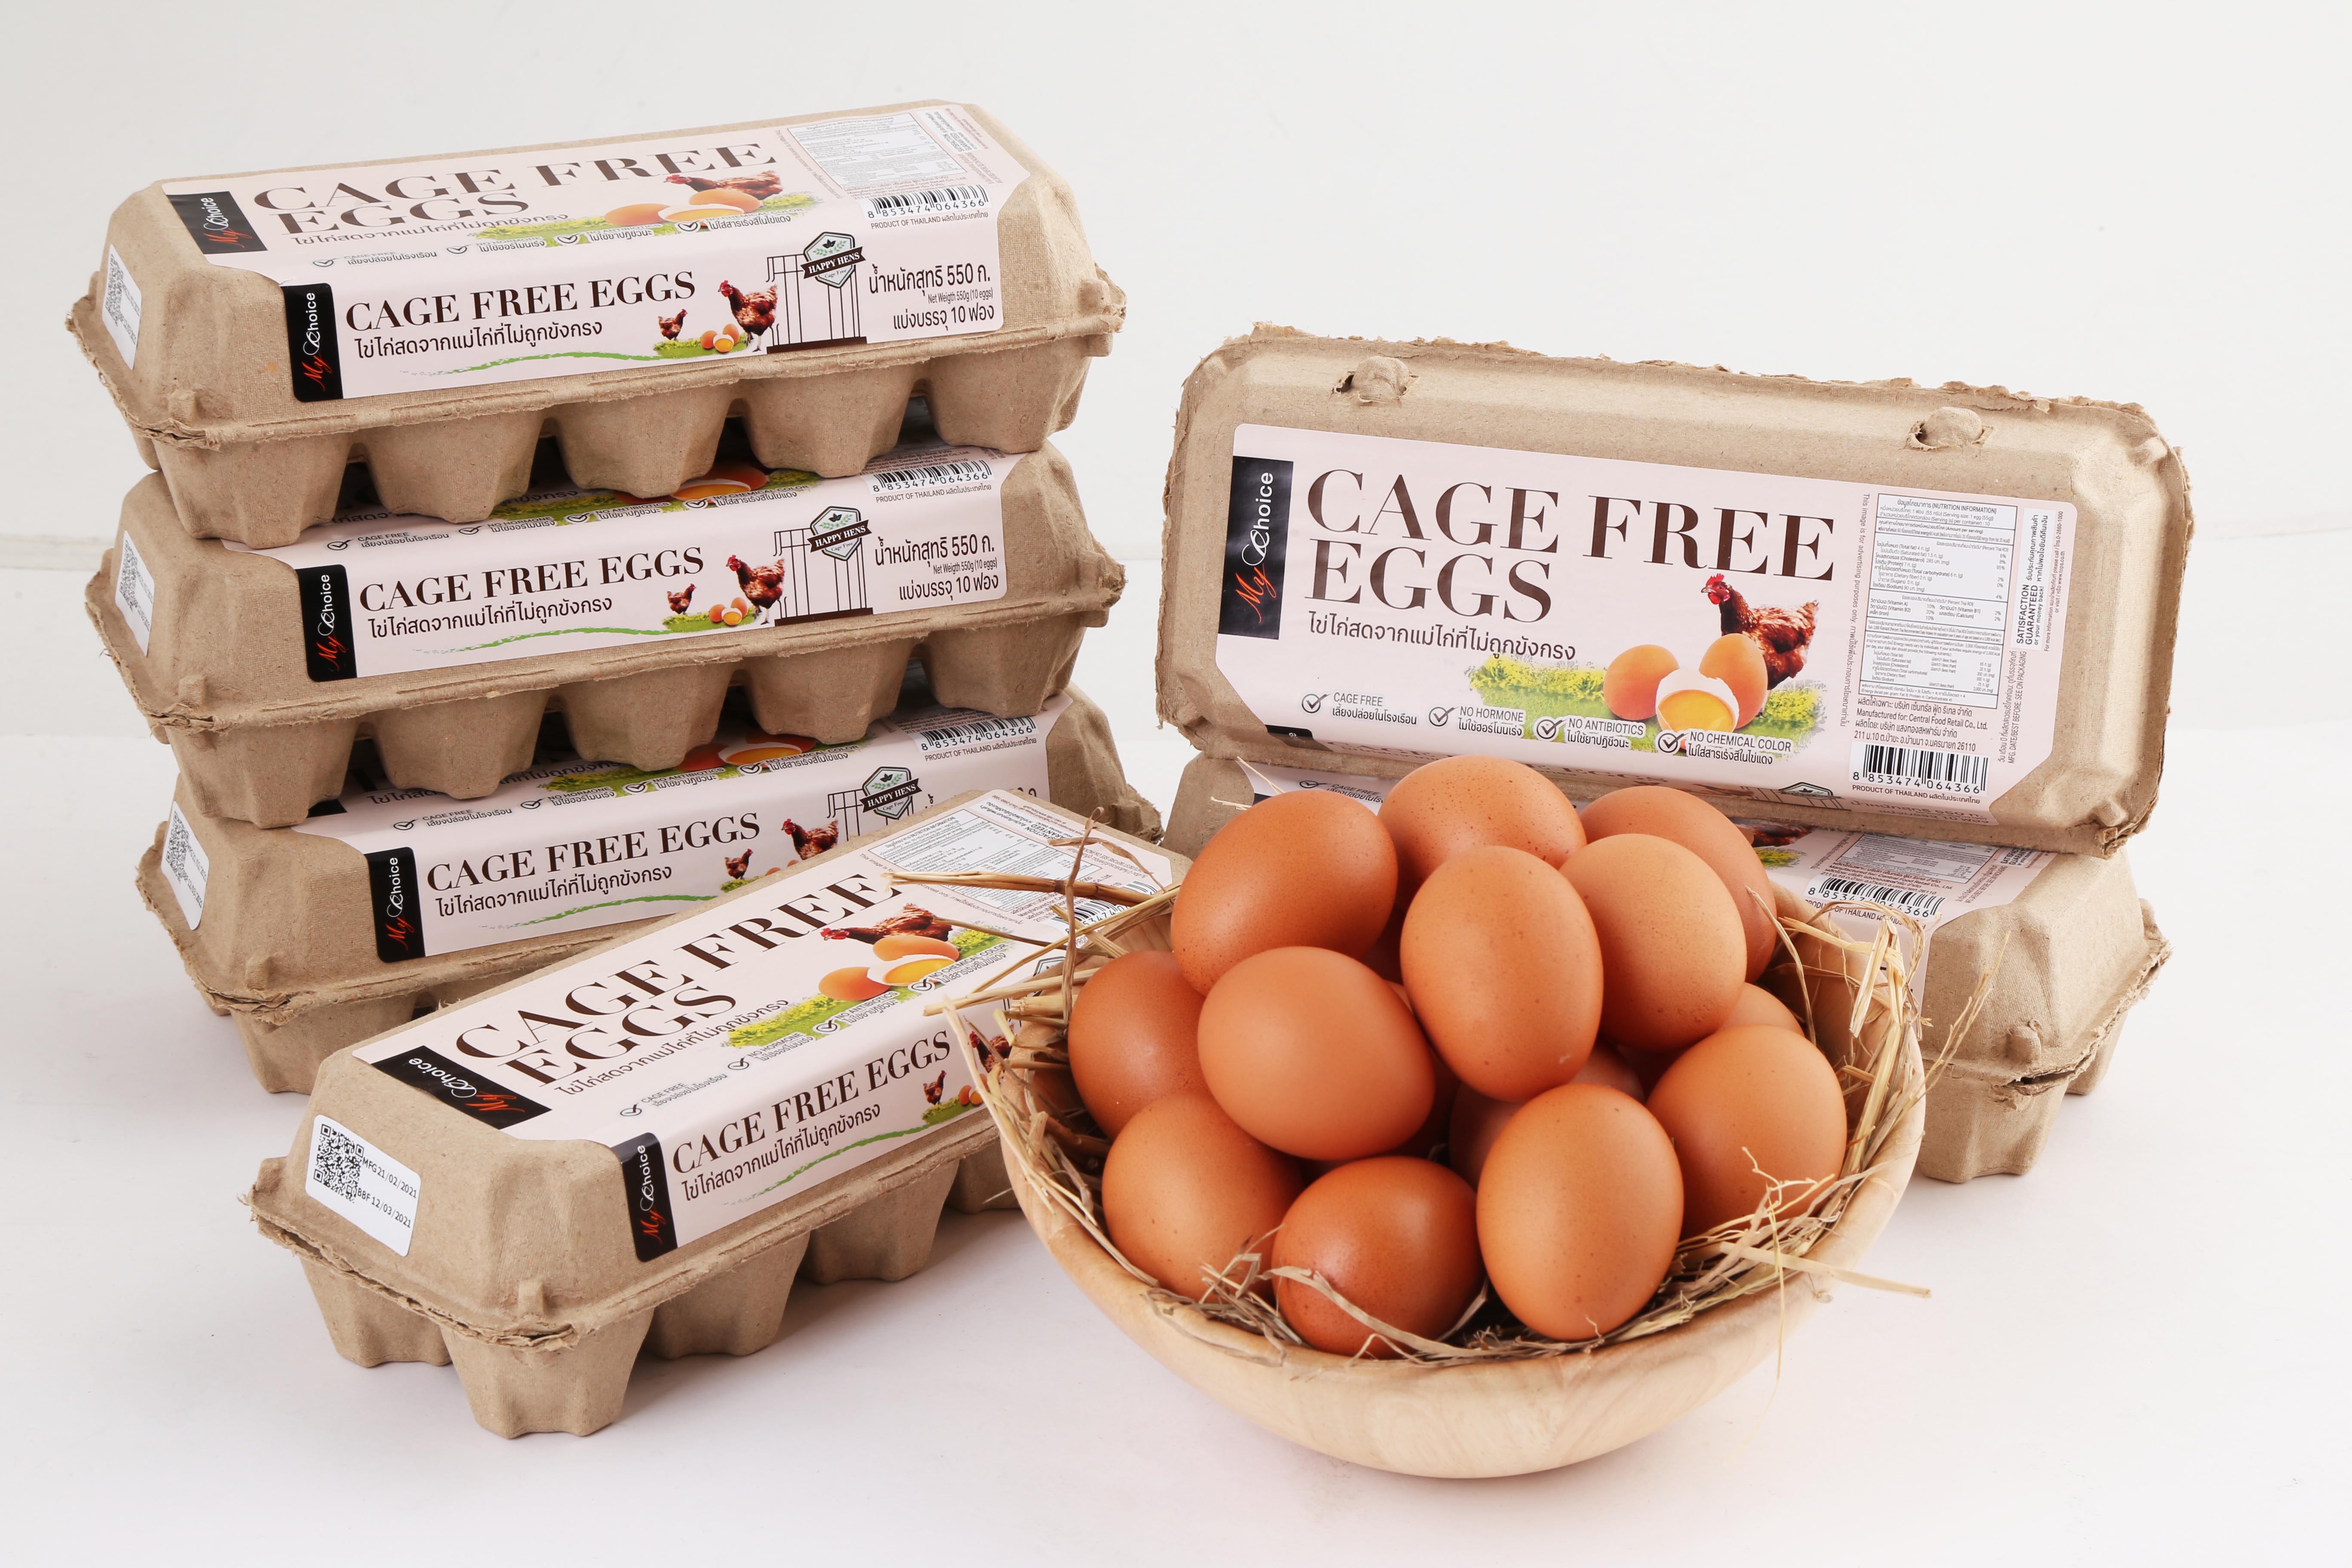 Care Free Eggs